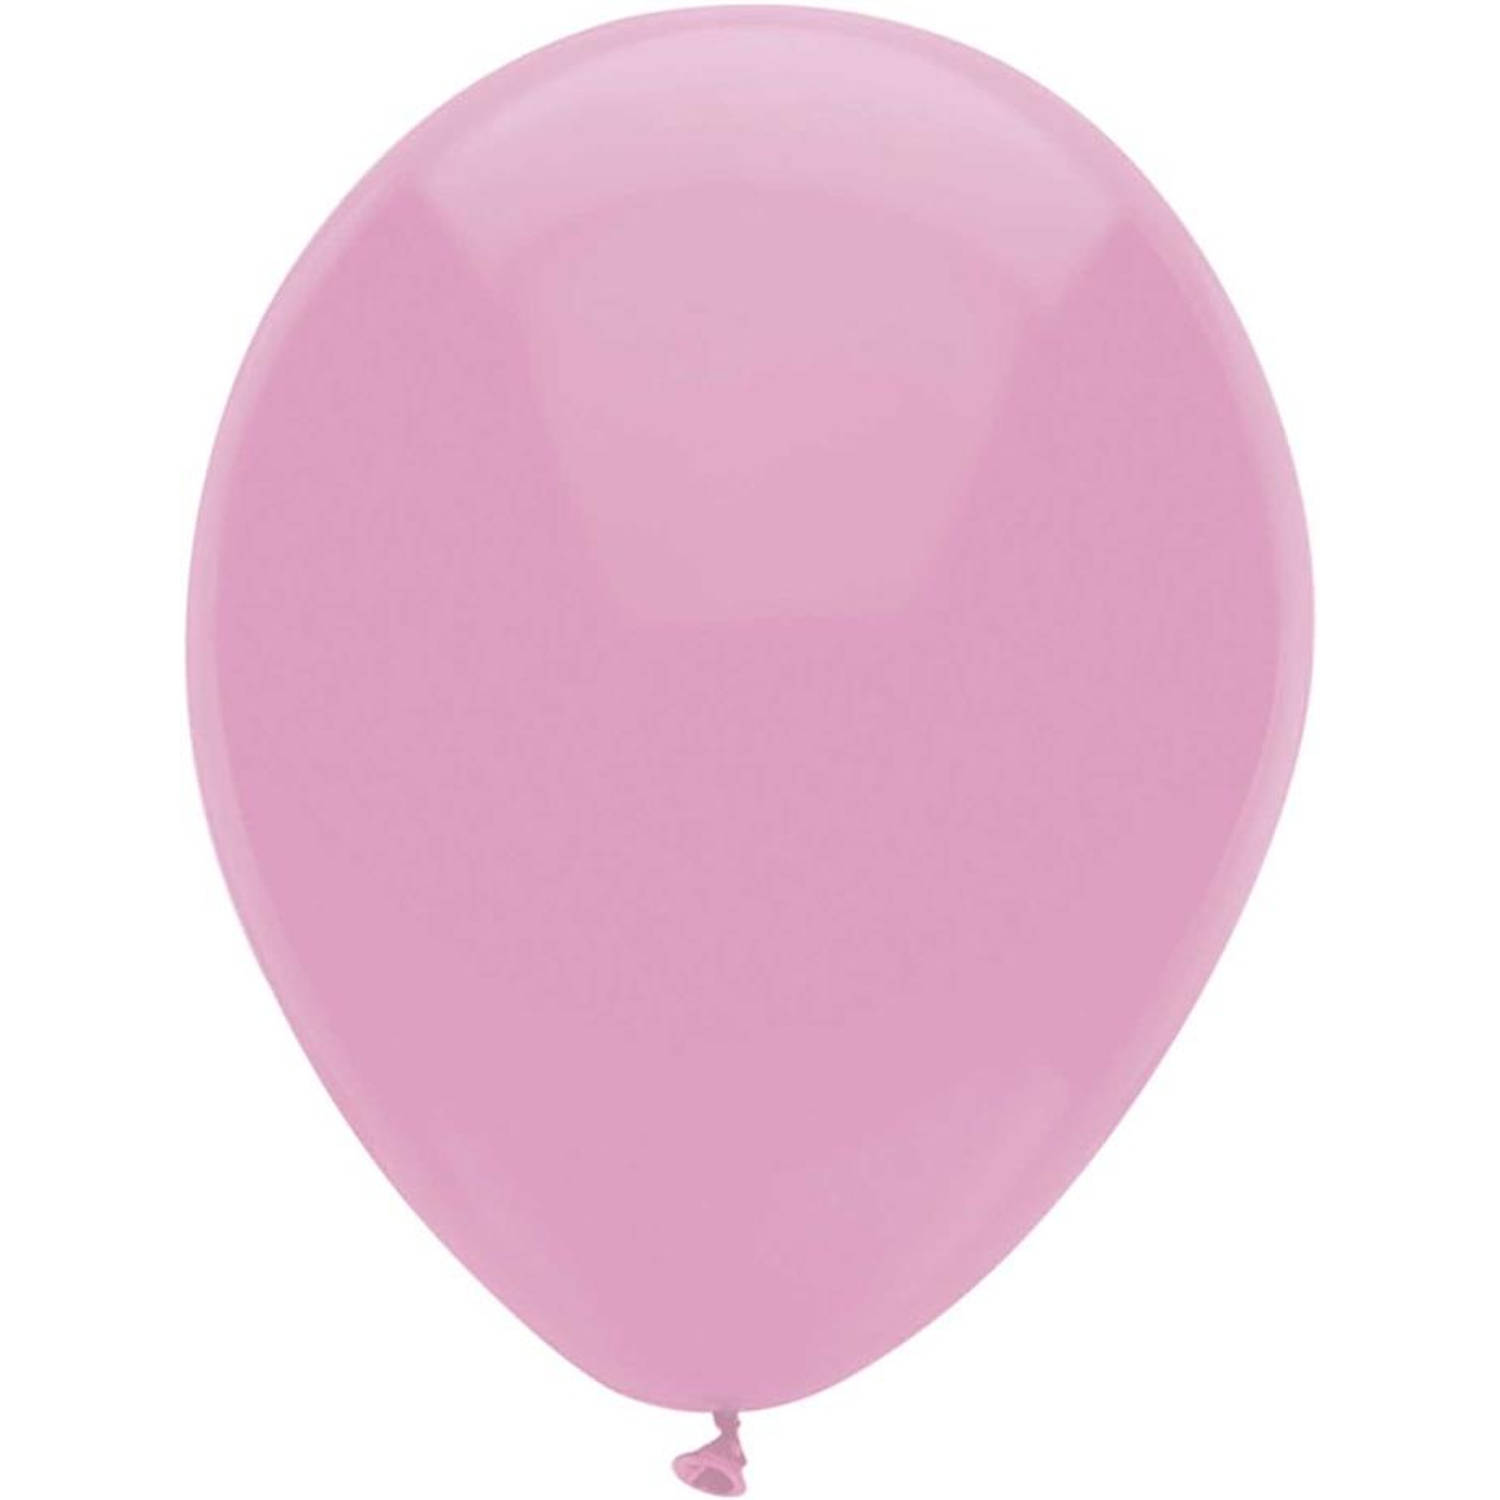 Haza - Ballonnen - roze - verjaardag/thema feest - 100x stuks - 29 cm